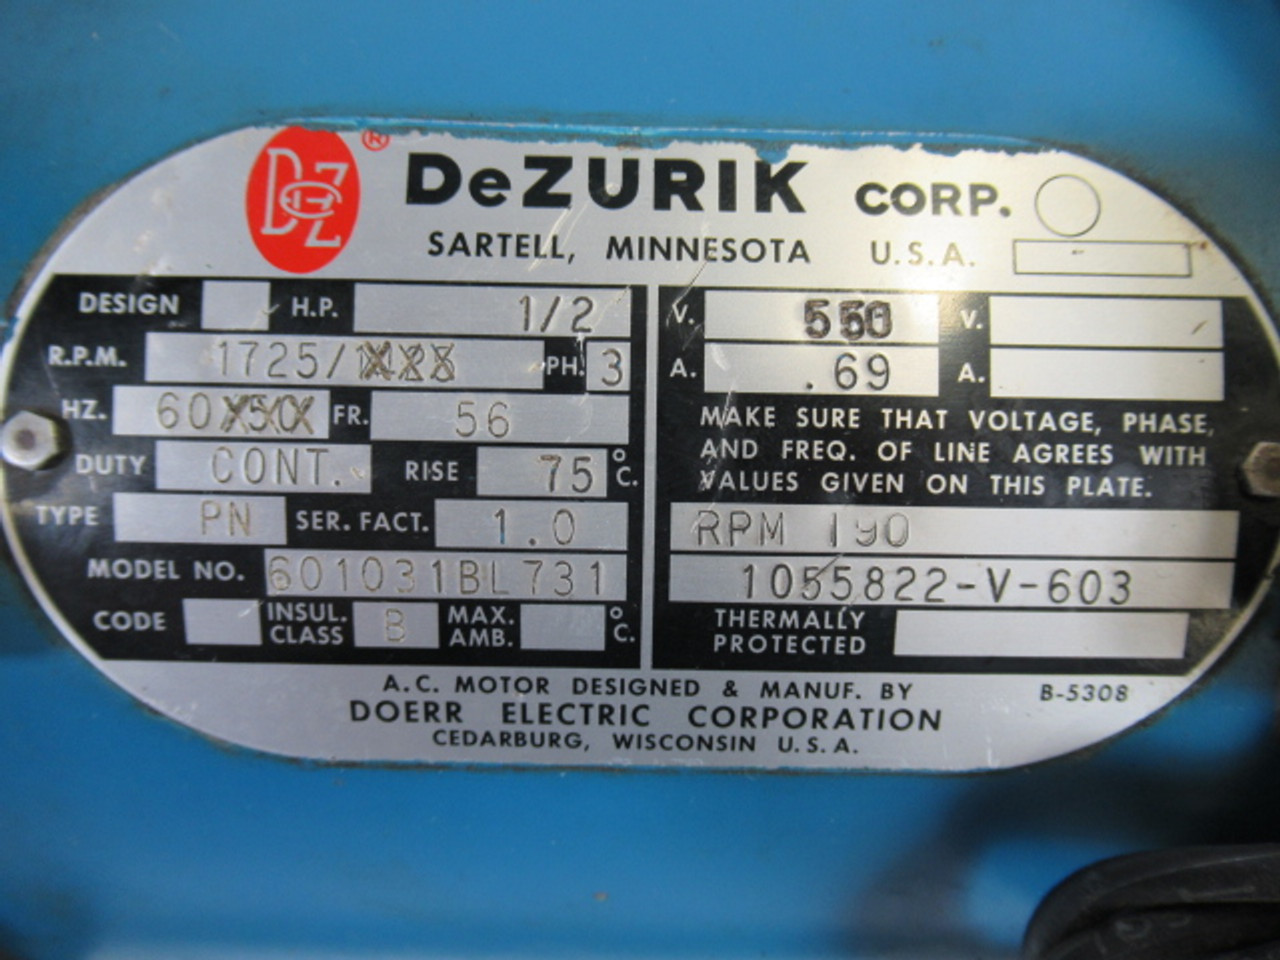 DeZurik 601031BL731 Motor 1/2HP 1725RPM 550V 56 3Ph 0.69A 60Hz ! AS IS !